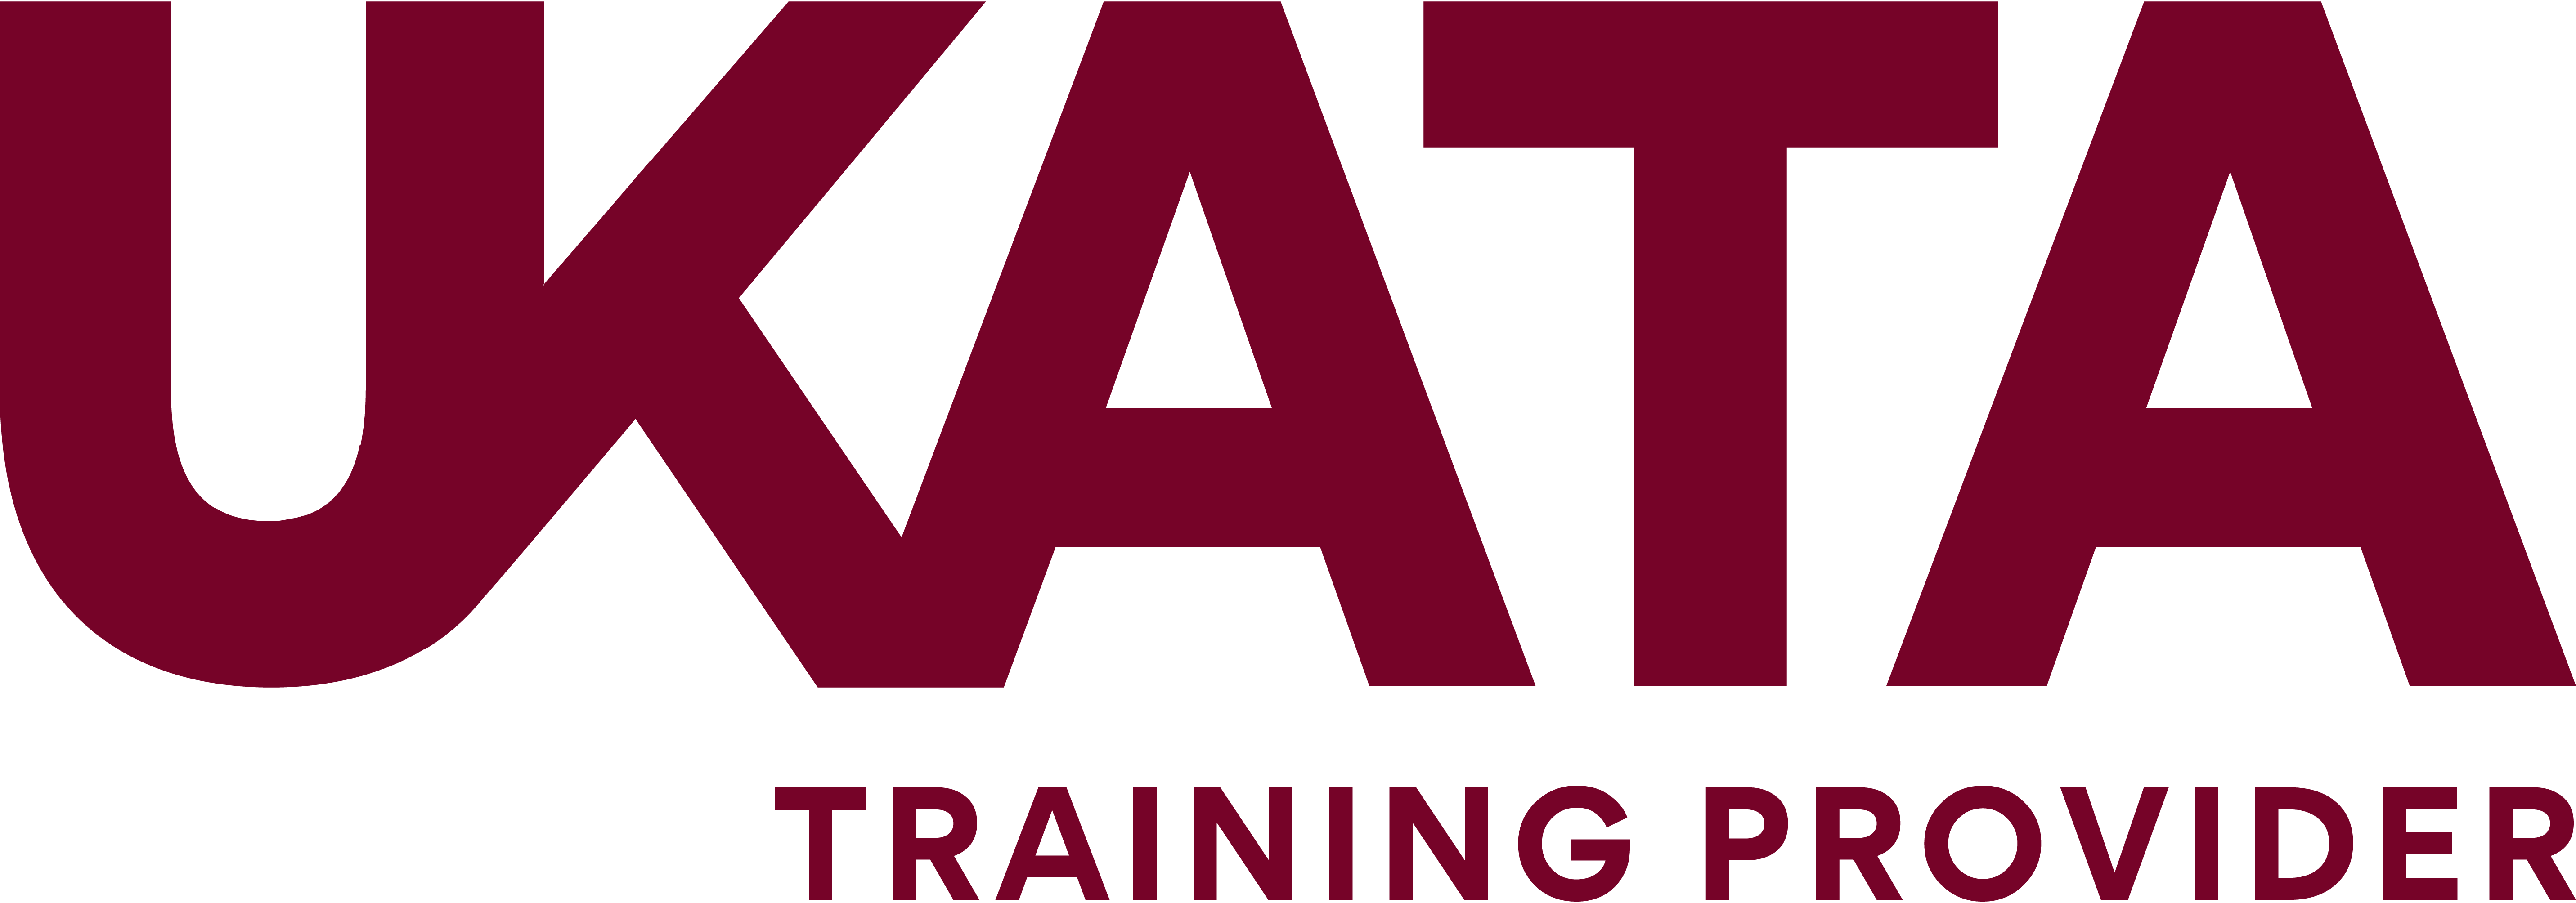 //www.tetraconsulting.co.uk/wp-content/uploads/UKATA-training-provider.png